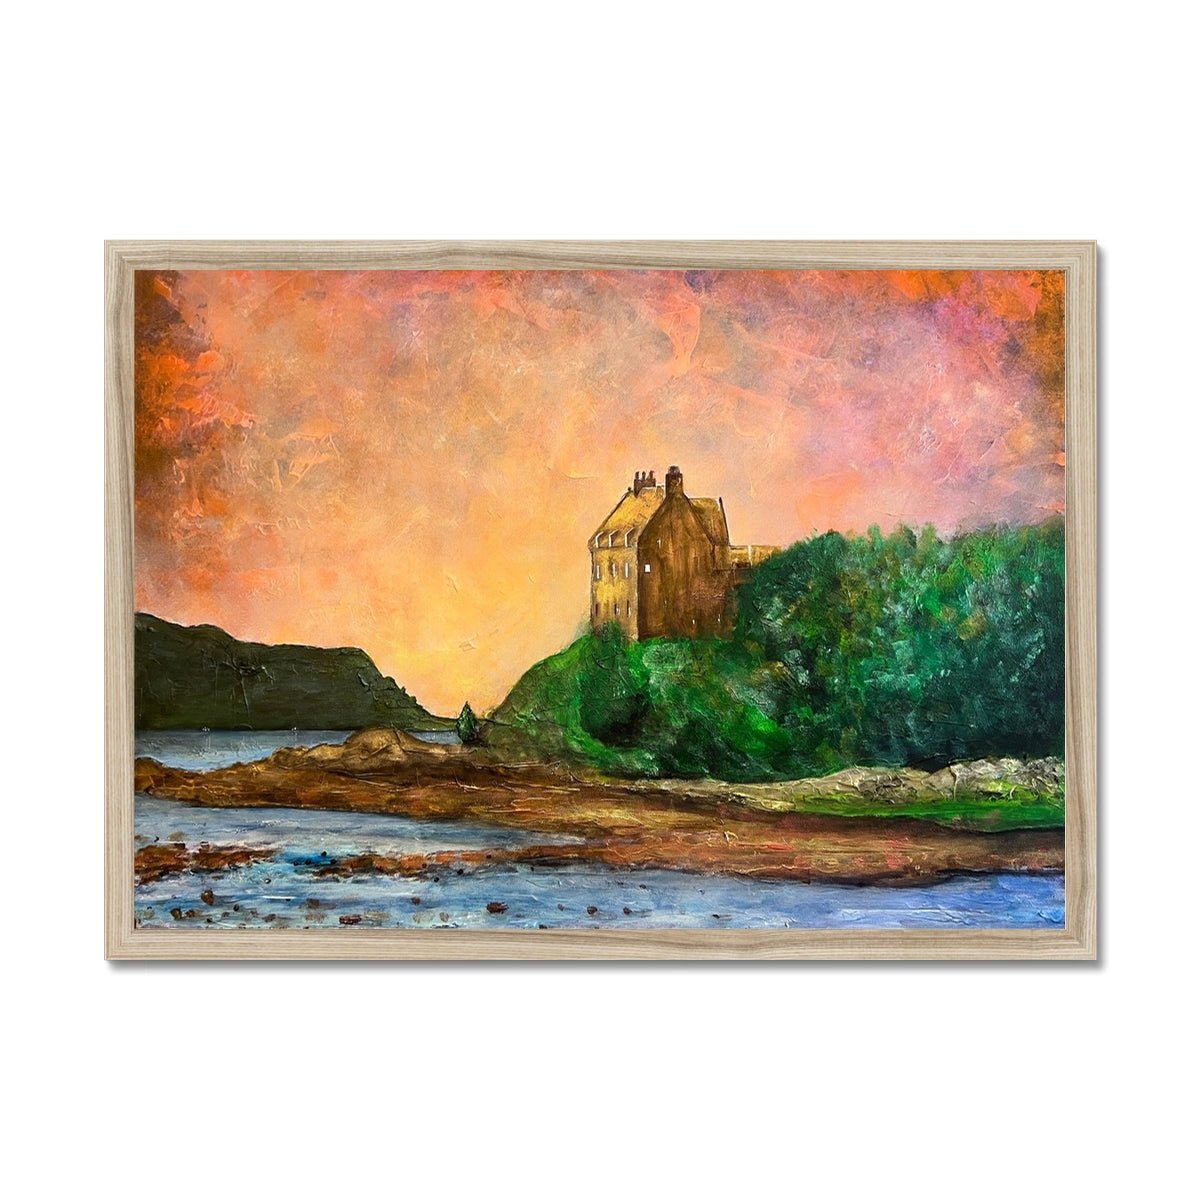 Duntrune Castle Painting | Framed Prints From Scotland-Framed Prints-Historic & Iconic Scotland Art Gallery-A2 Landscape-Natural Frame-Paintings, Prints, Homeware, Art Gifts From Scotland By Scottish Artist Kevin Hunter